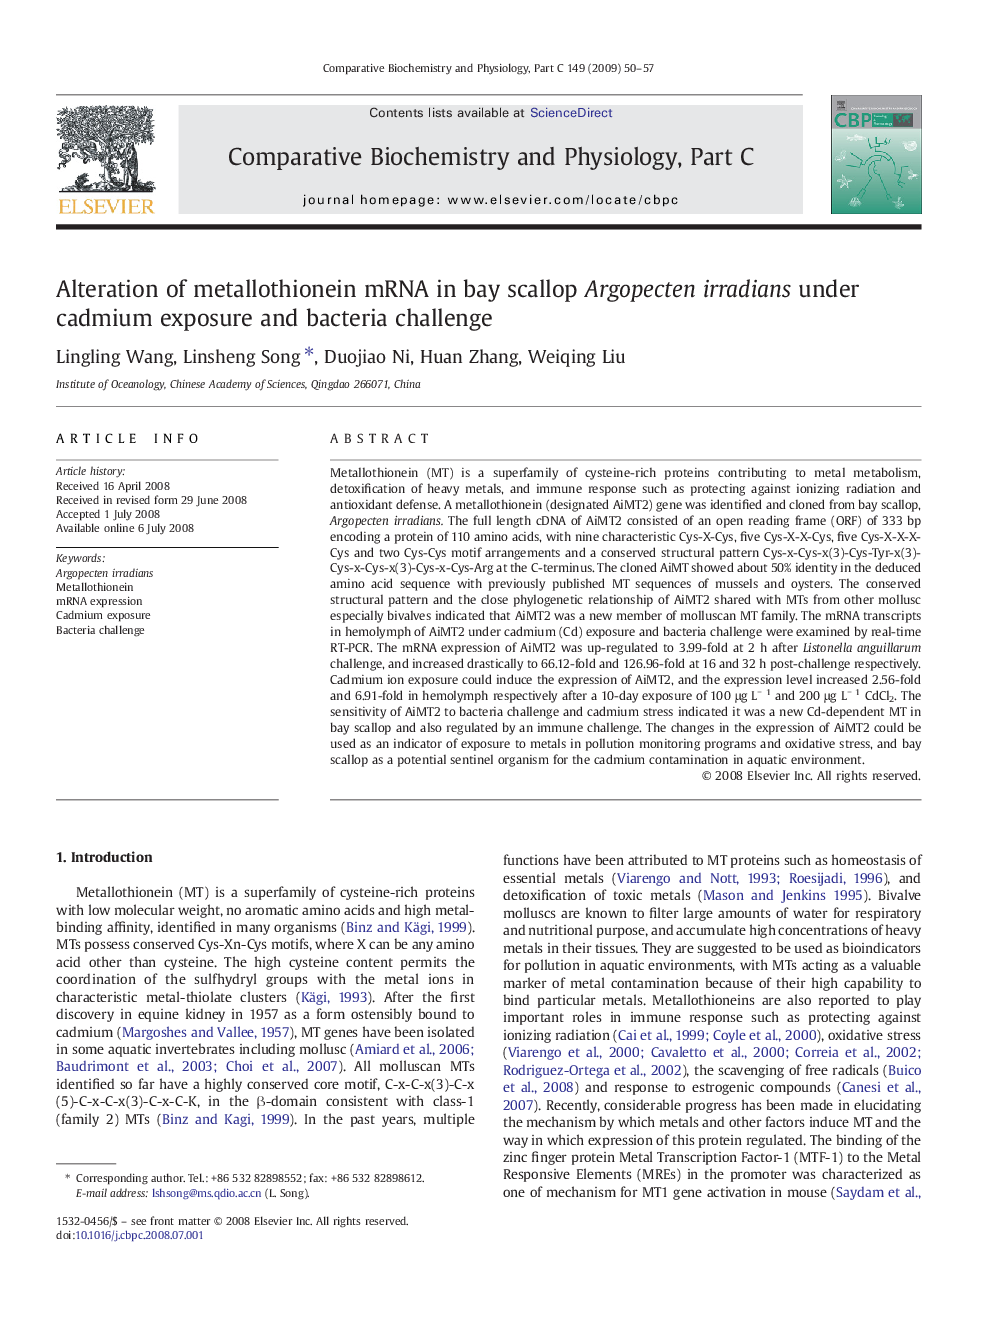 Alteration of metallothionein mRNA in bay scallop Argopecten irradians under cadmium exposure and bacteria challenge